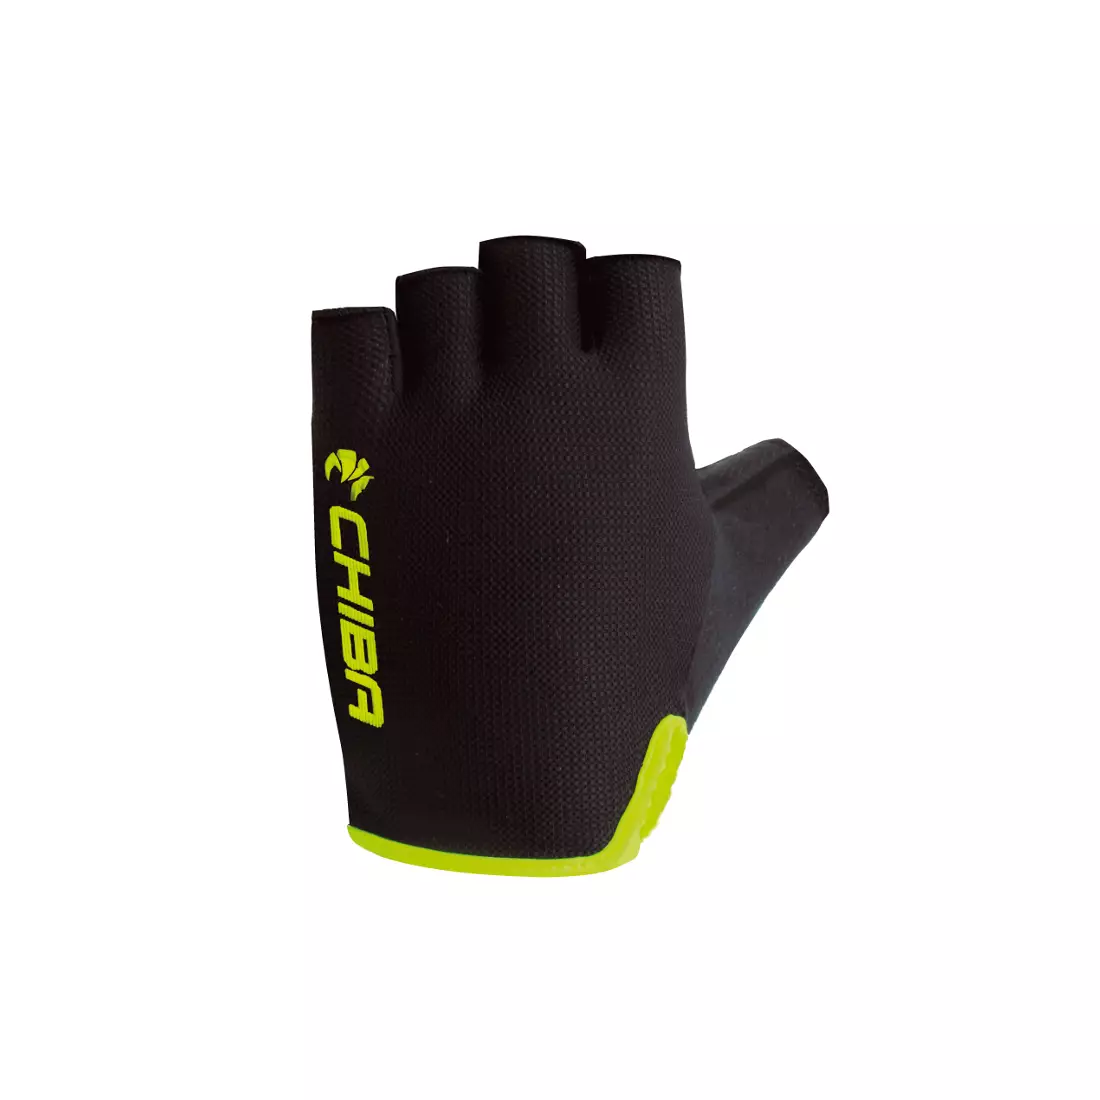 CHIBA BREEZE cycling gloves, black